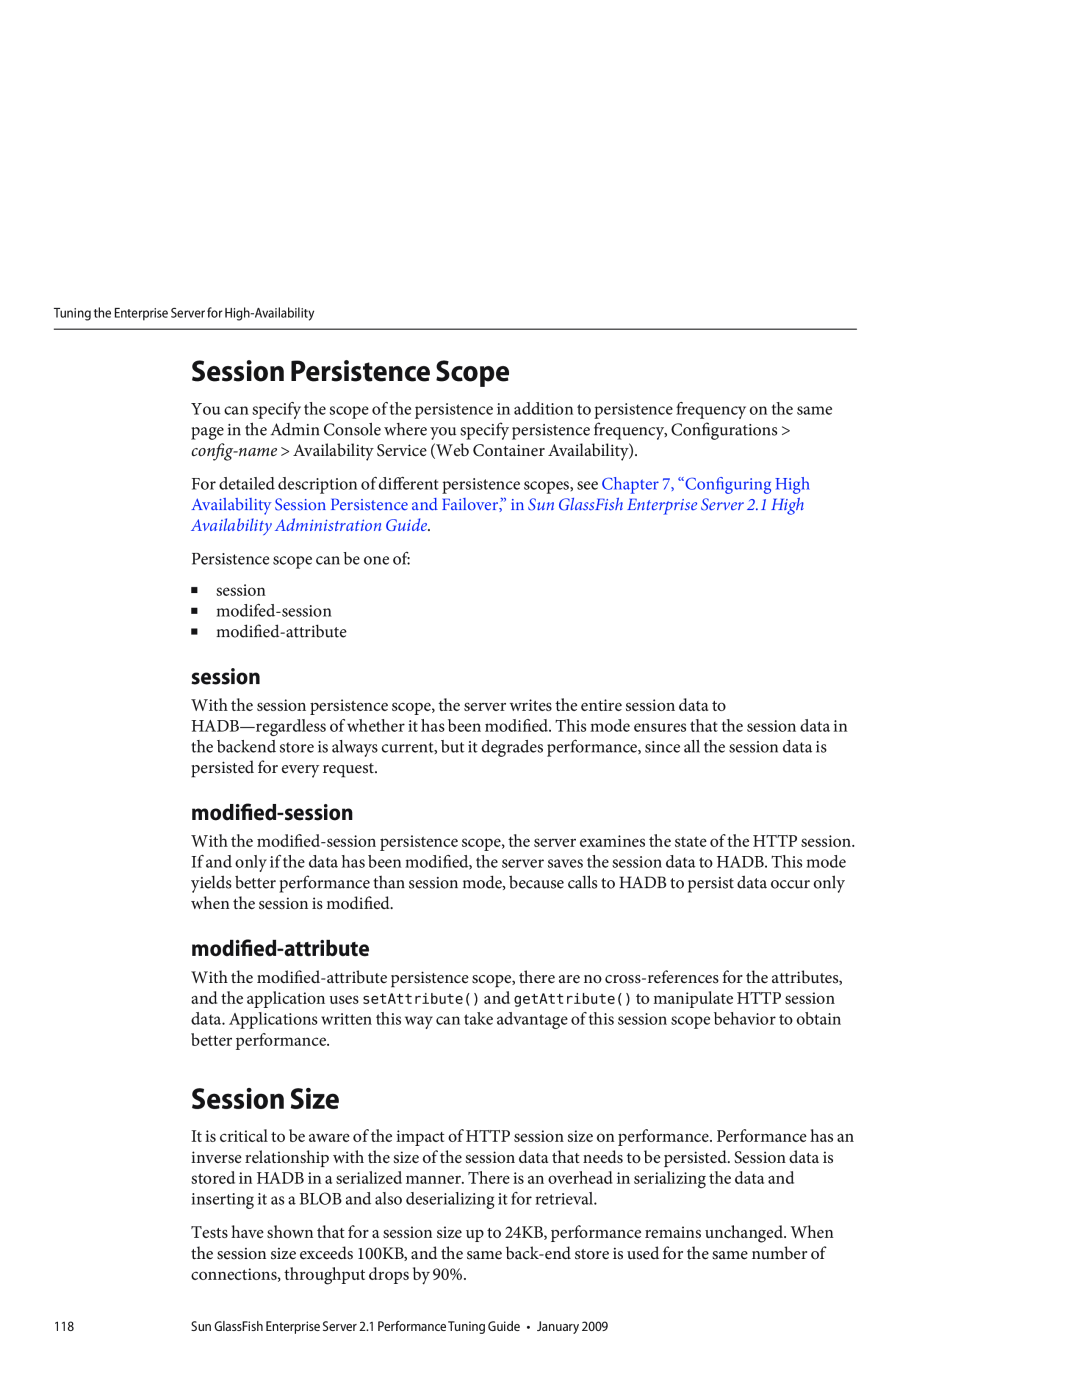 Sun Microsystems 820434310 manual Session Persistence Scope, Session Size, modified-session, modified-attribute 